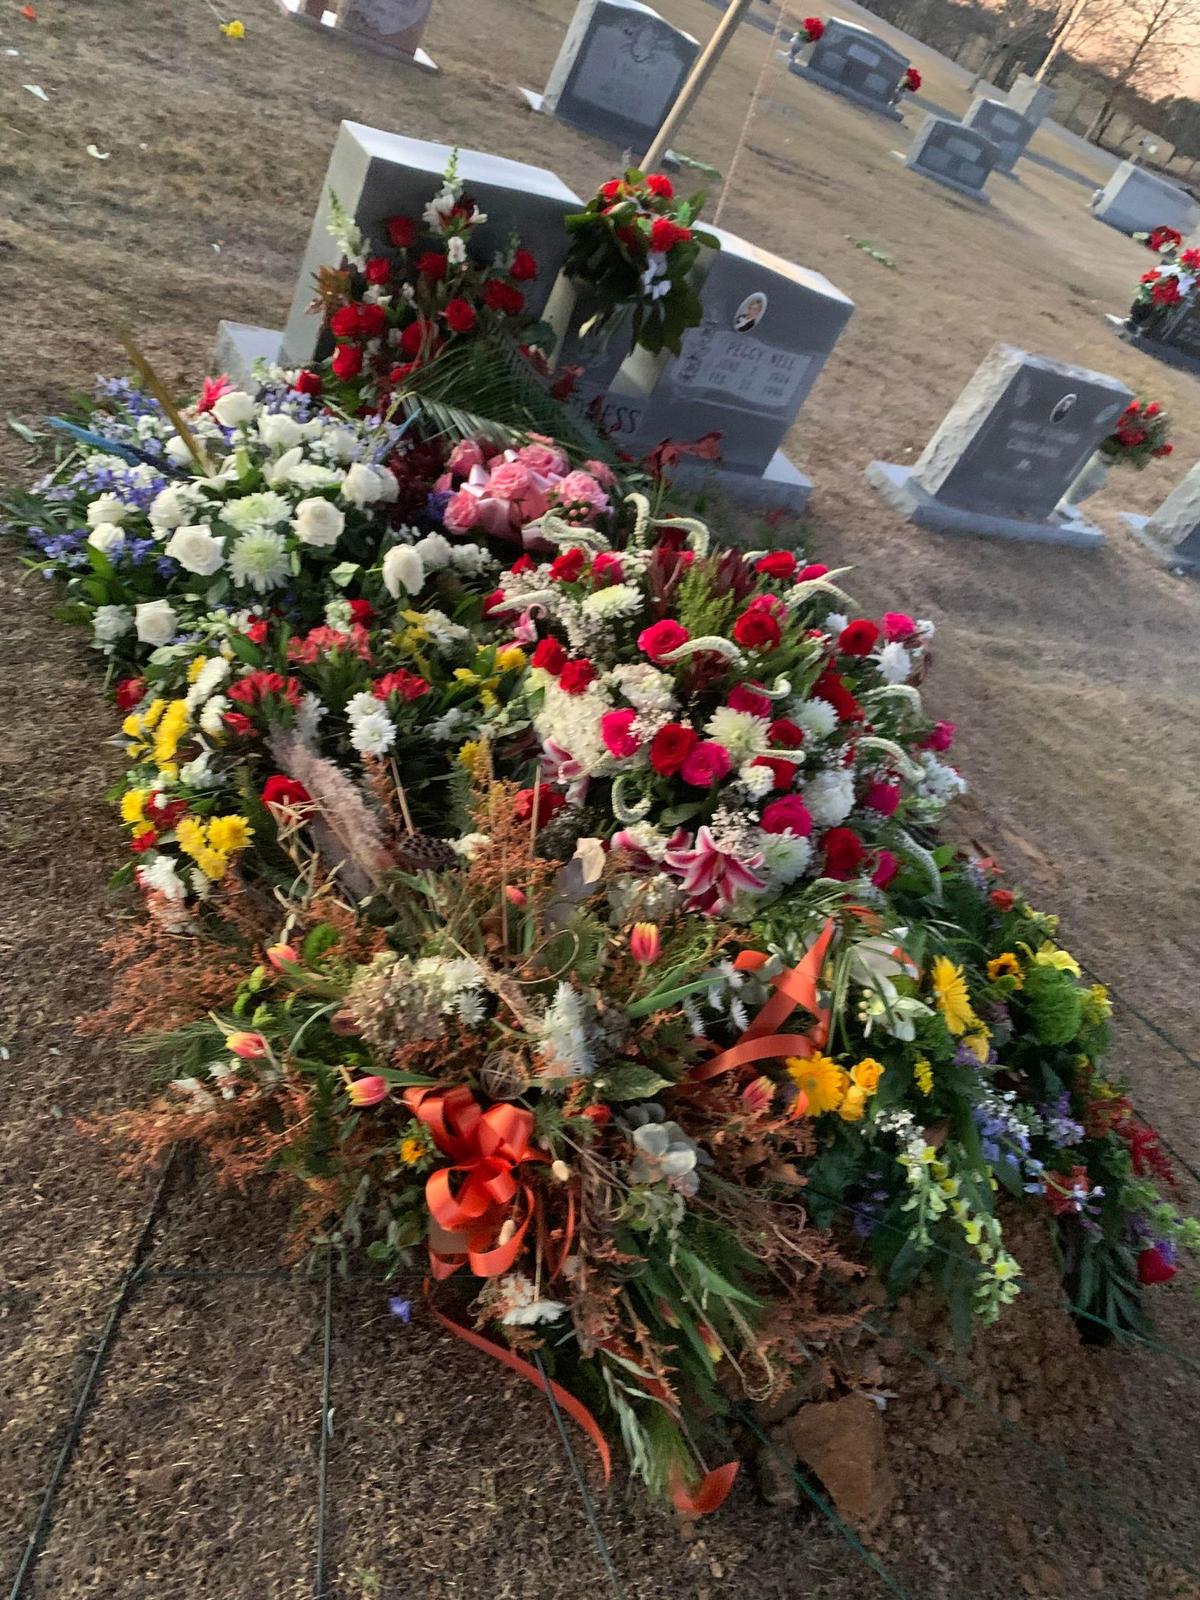 Hody's grave. (Courtesy of <a href="https://www.facebook.com/tania.nix.1">Tania Nix</a>)